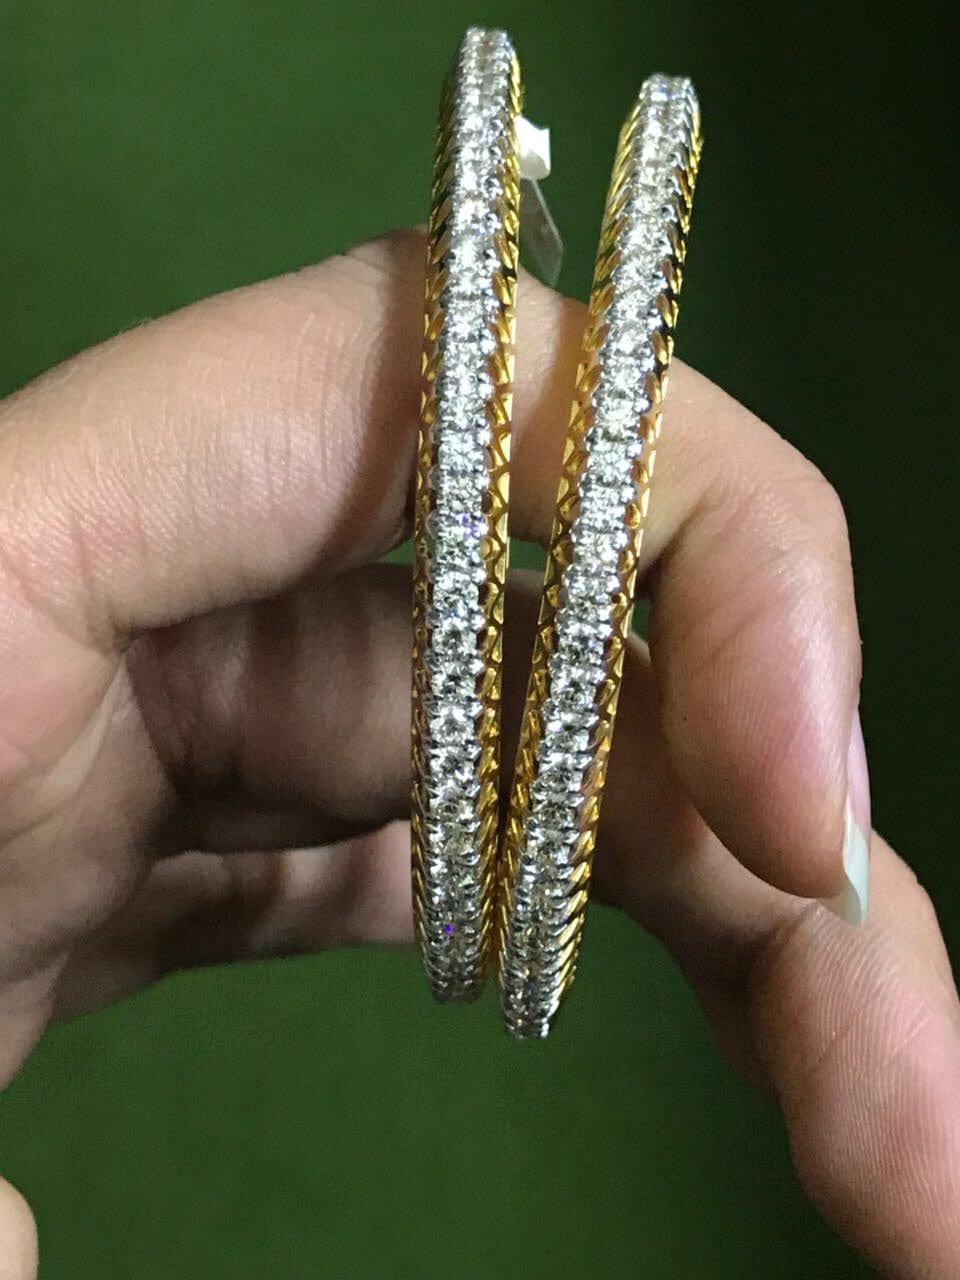 Gold Diamond Bracelet  Jaipur Jewels